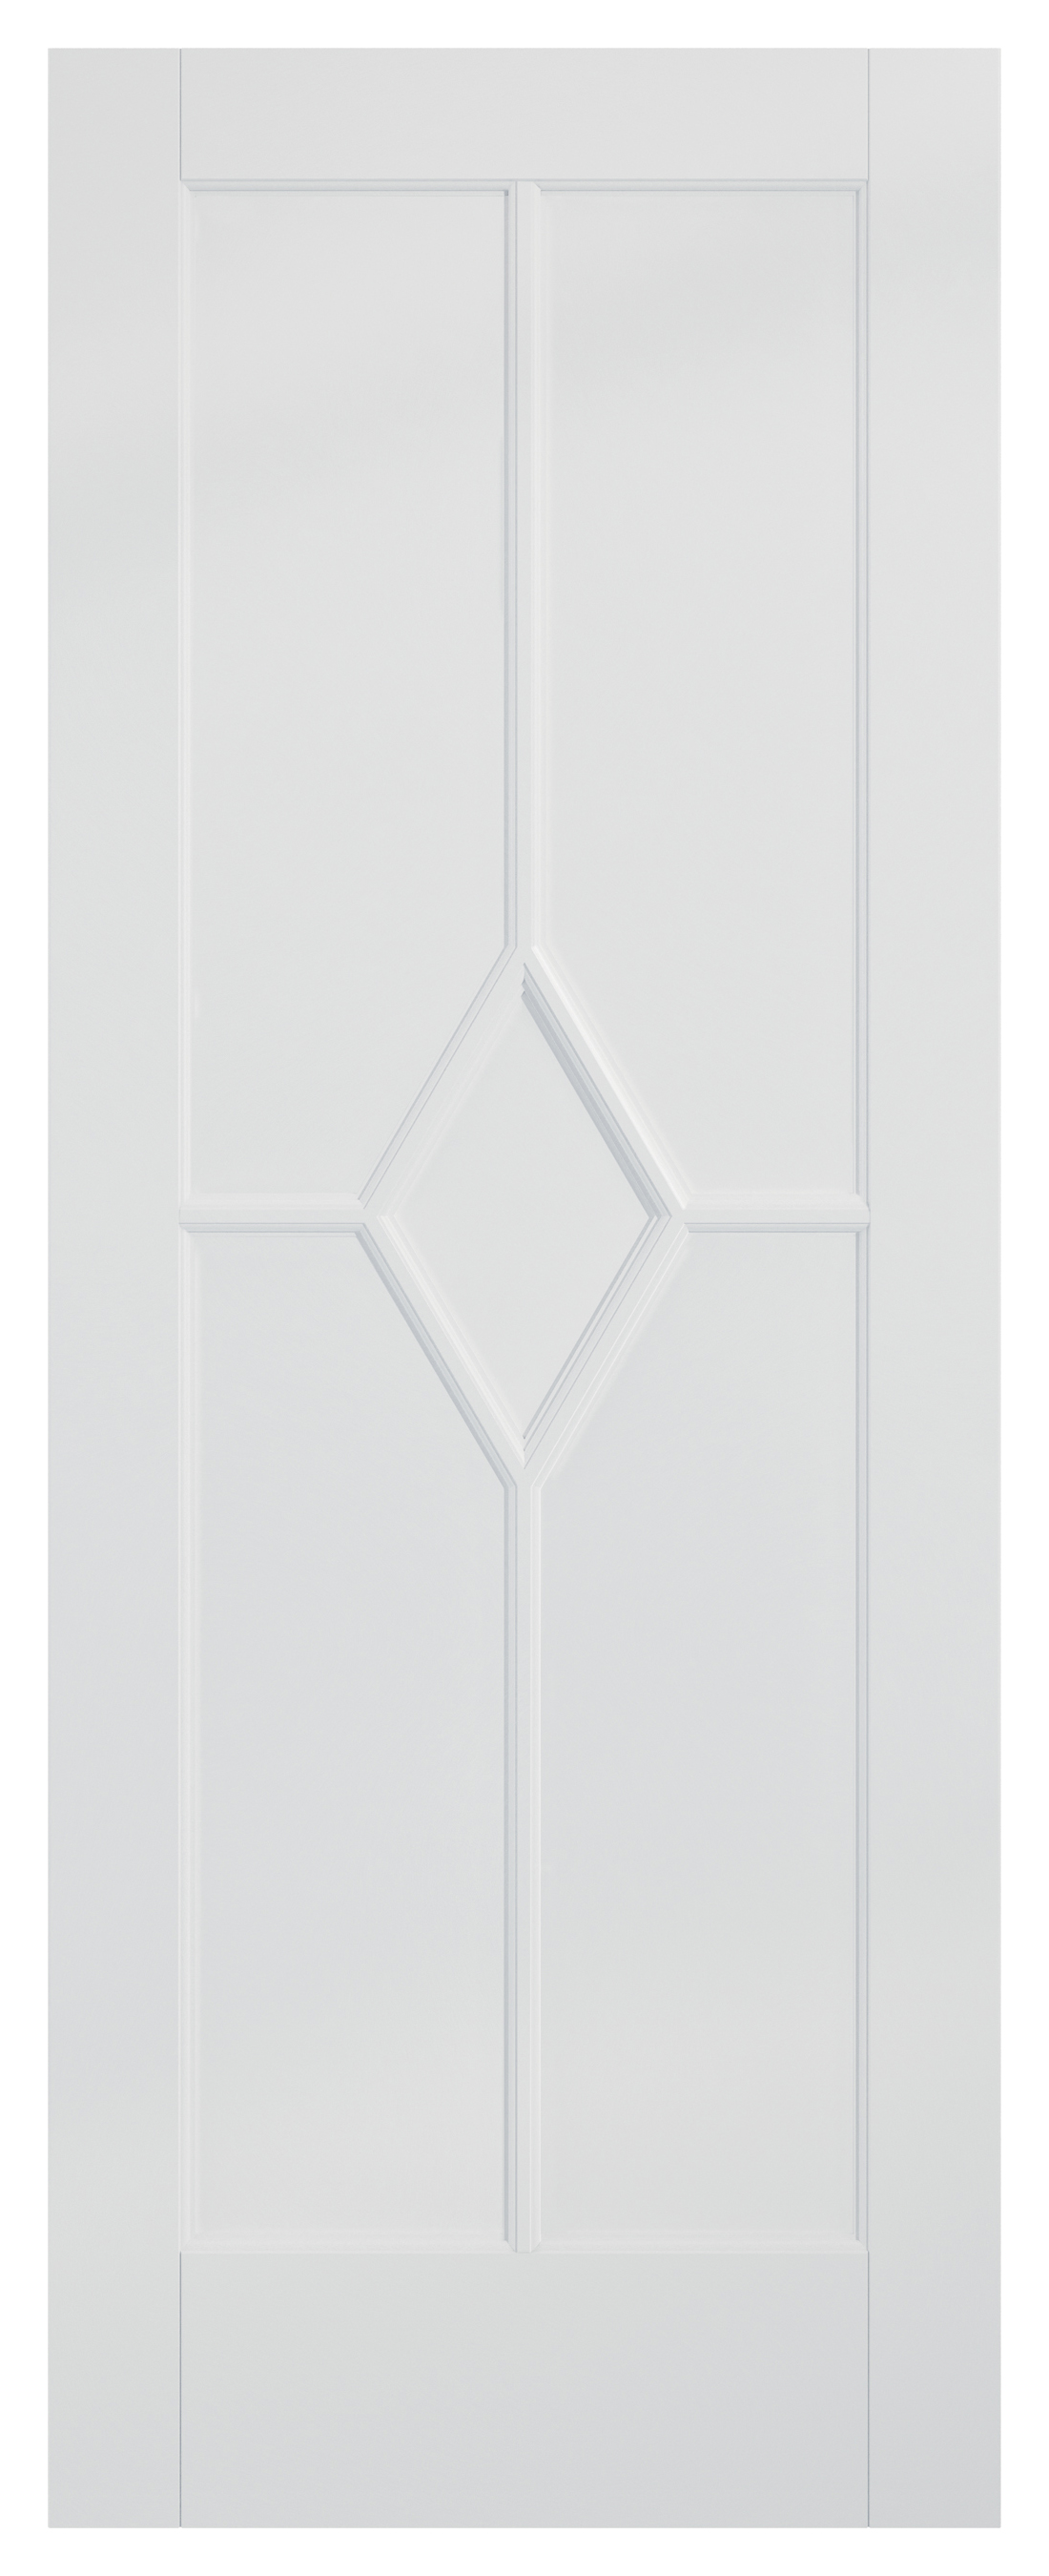 Image of LPD Internal Reims 5 Panel Primed White FD30 Fire Door - 686 x 1981mm